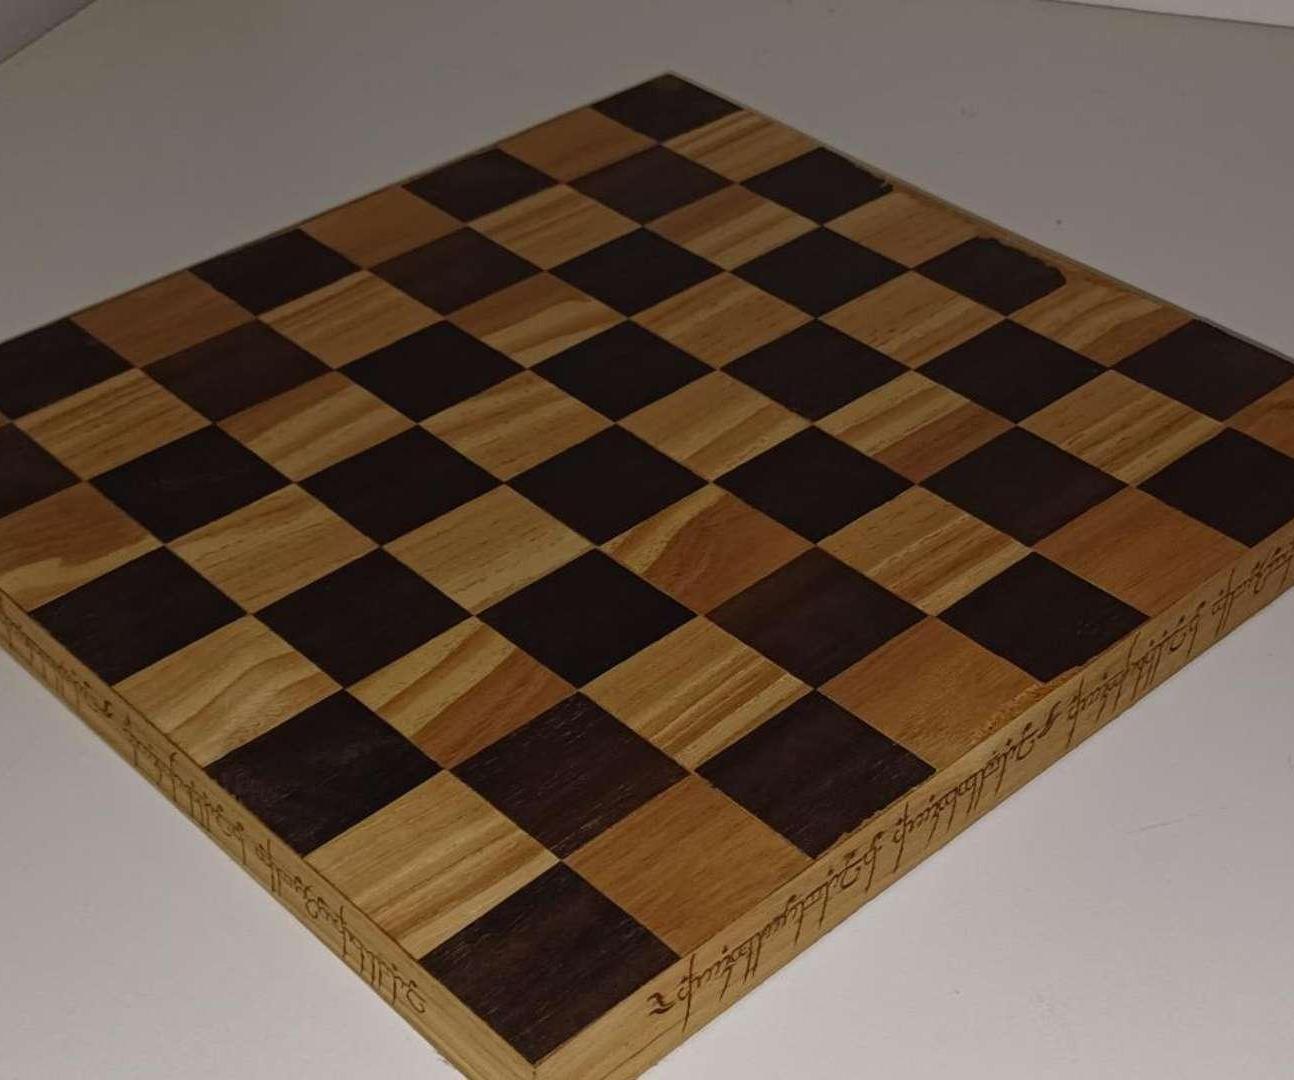 Making a Chess Board